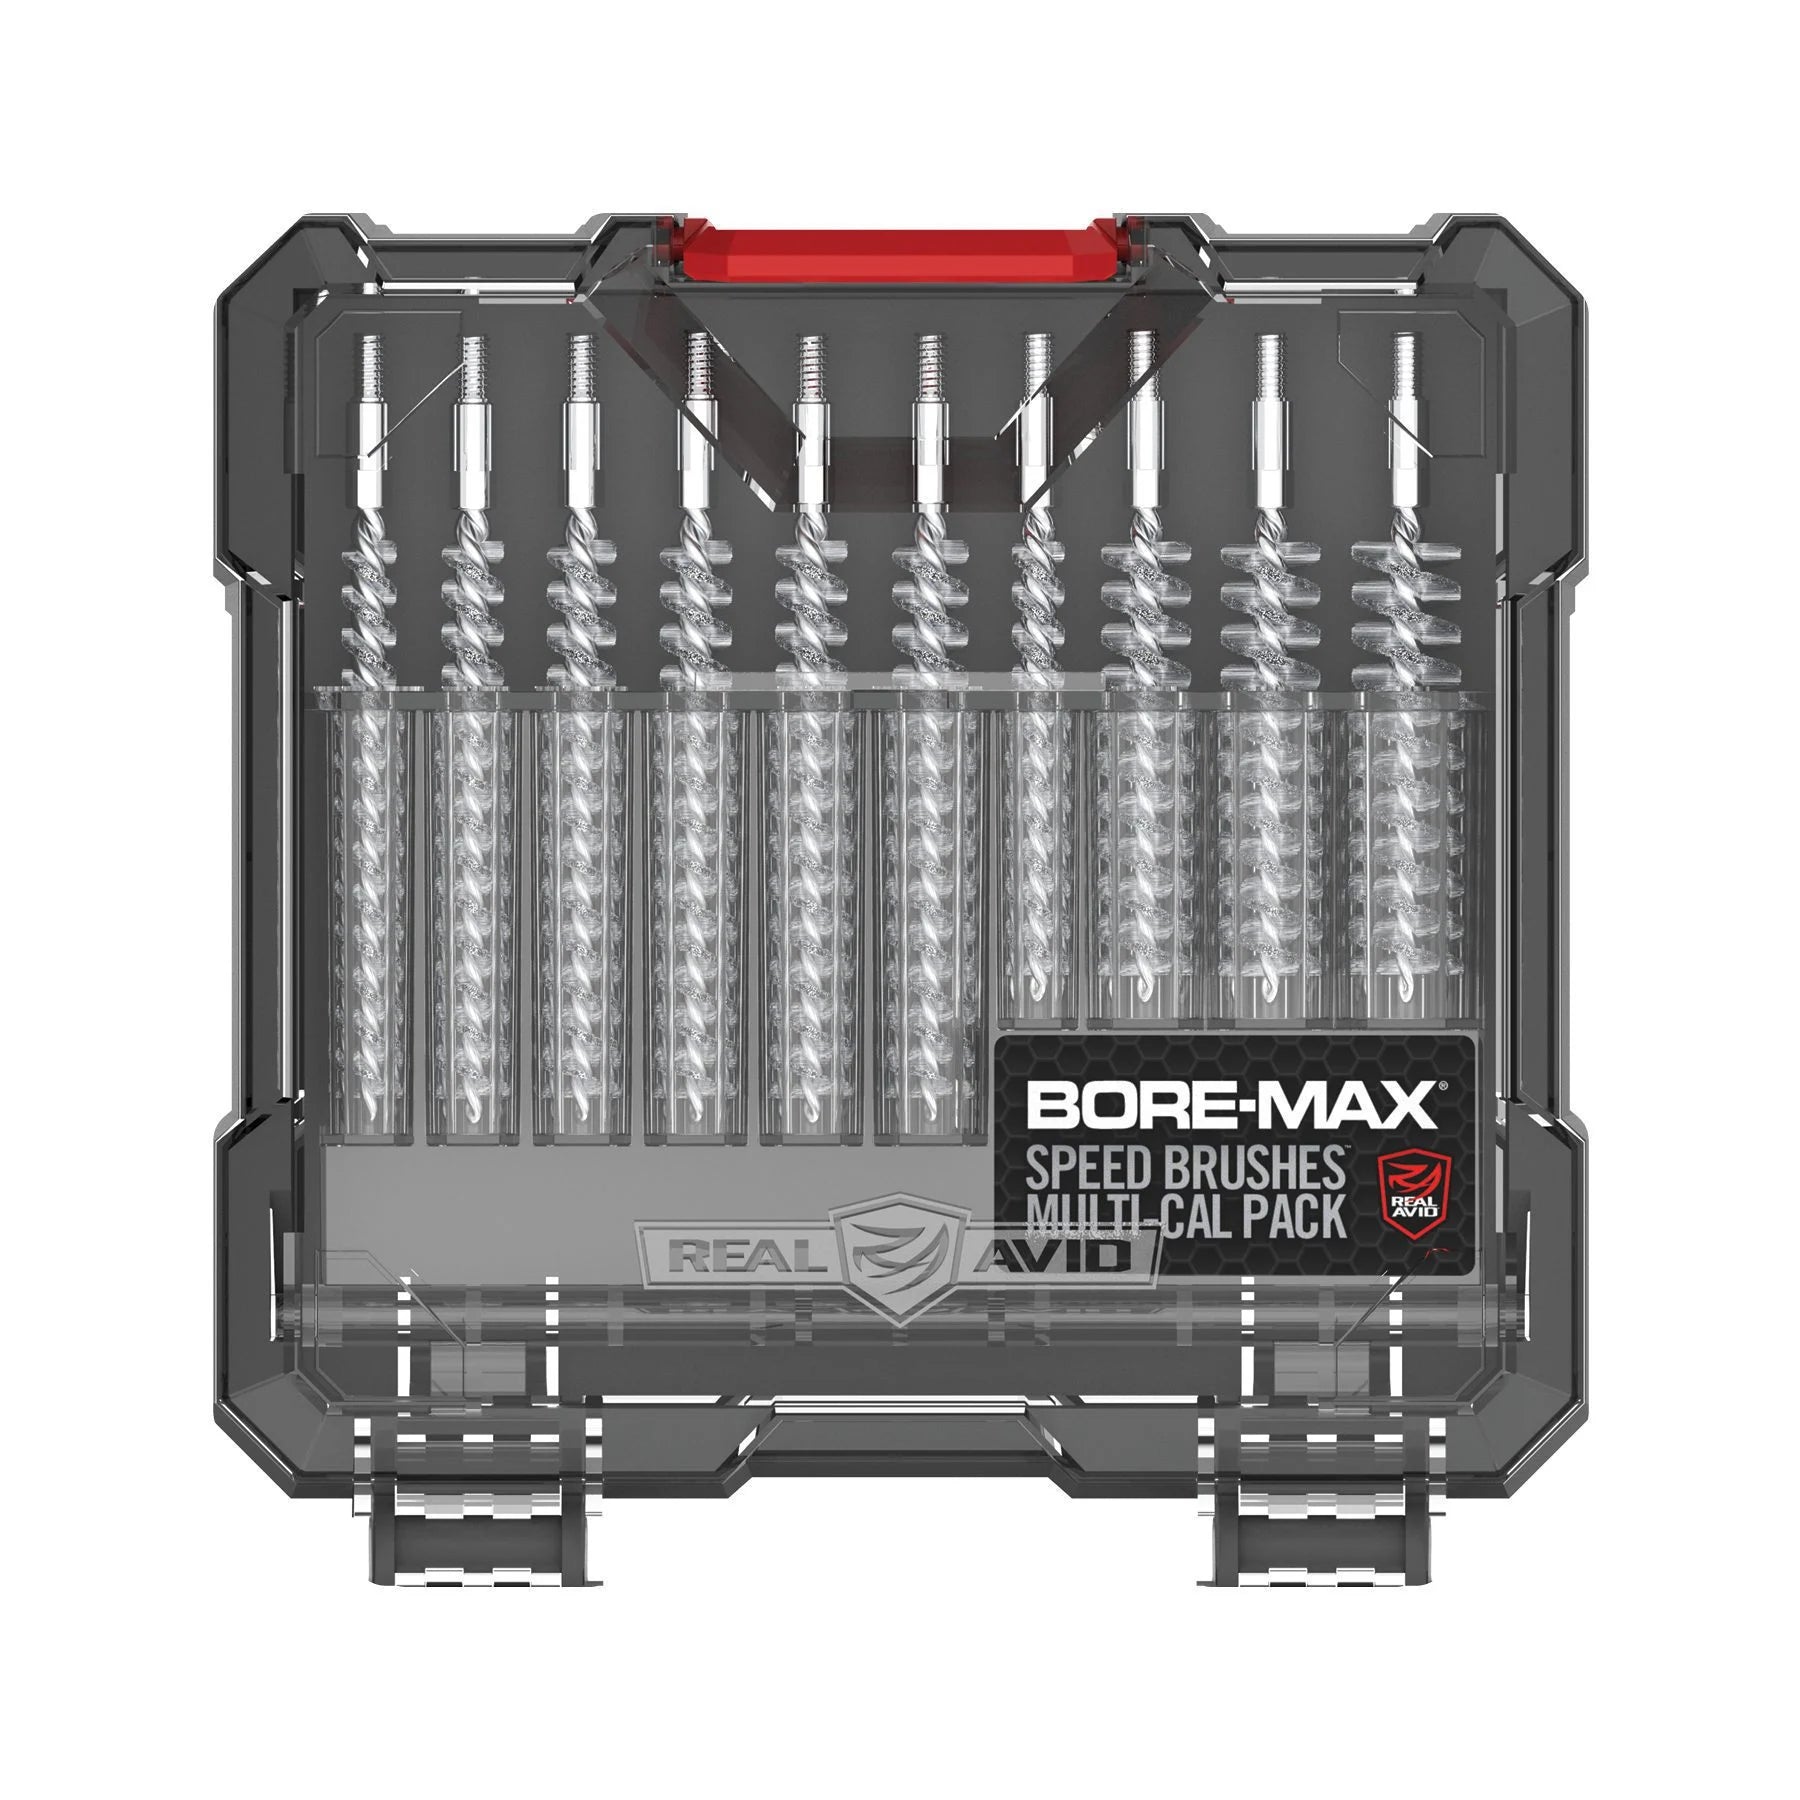 Real Avid Bore-Max Speed Brushes Multi-Cal Pack